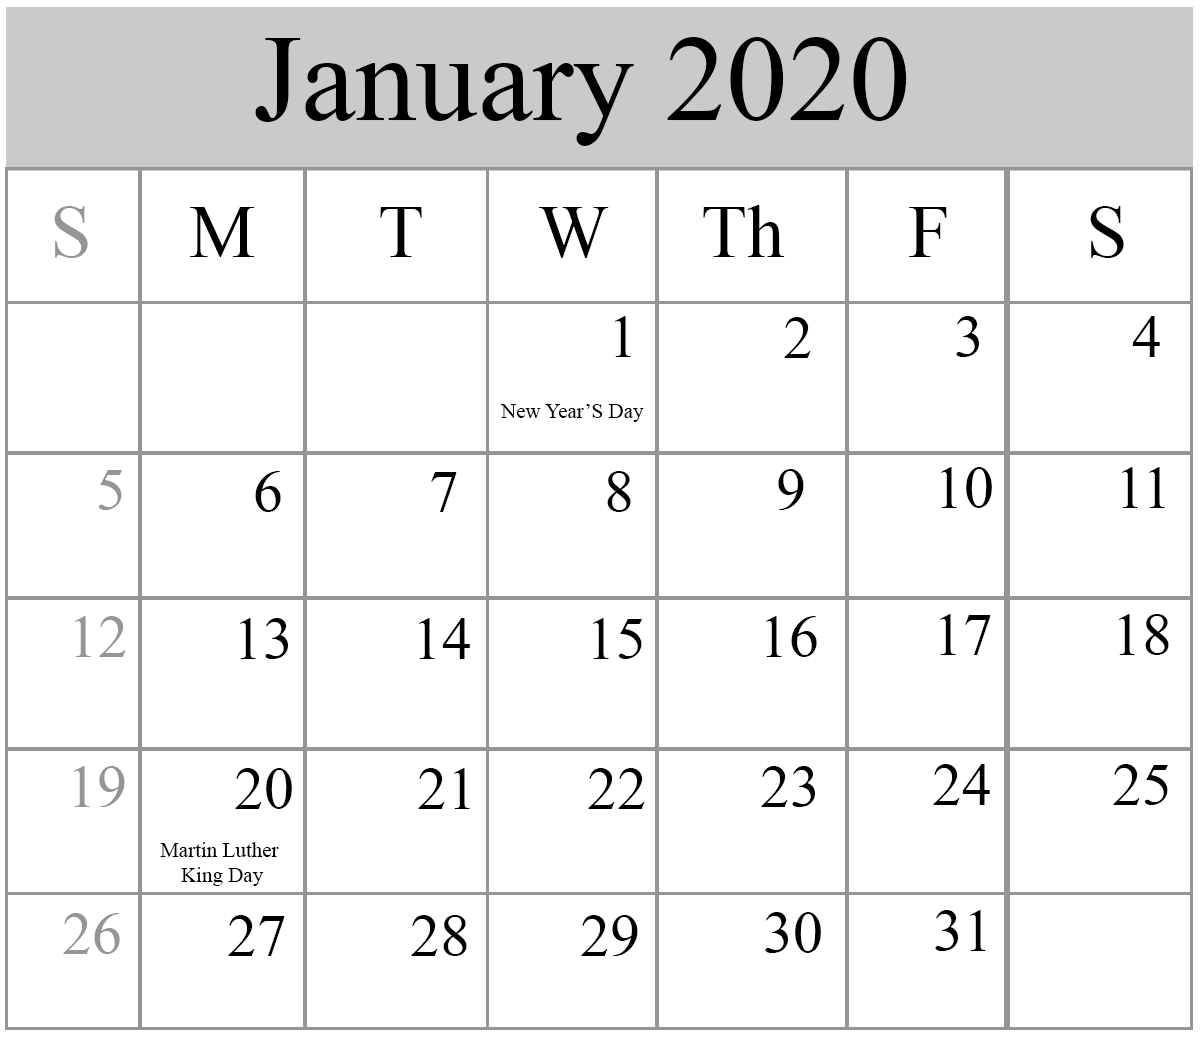 Full List Of January Holidays 2020 - January 2020 Calendar